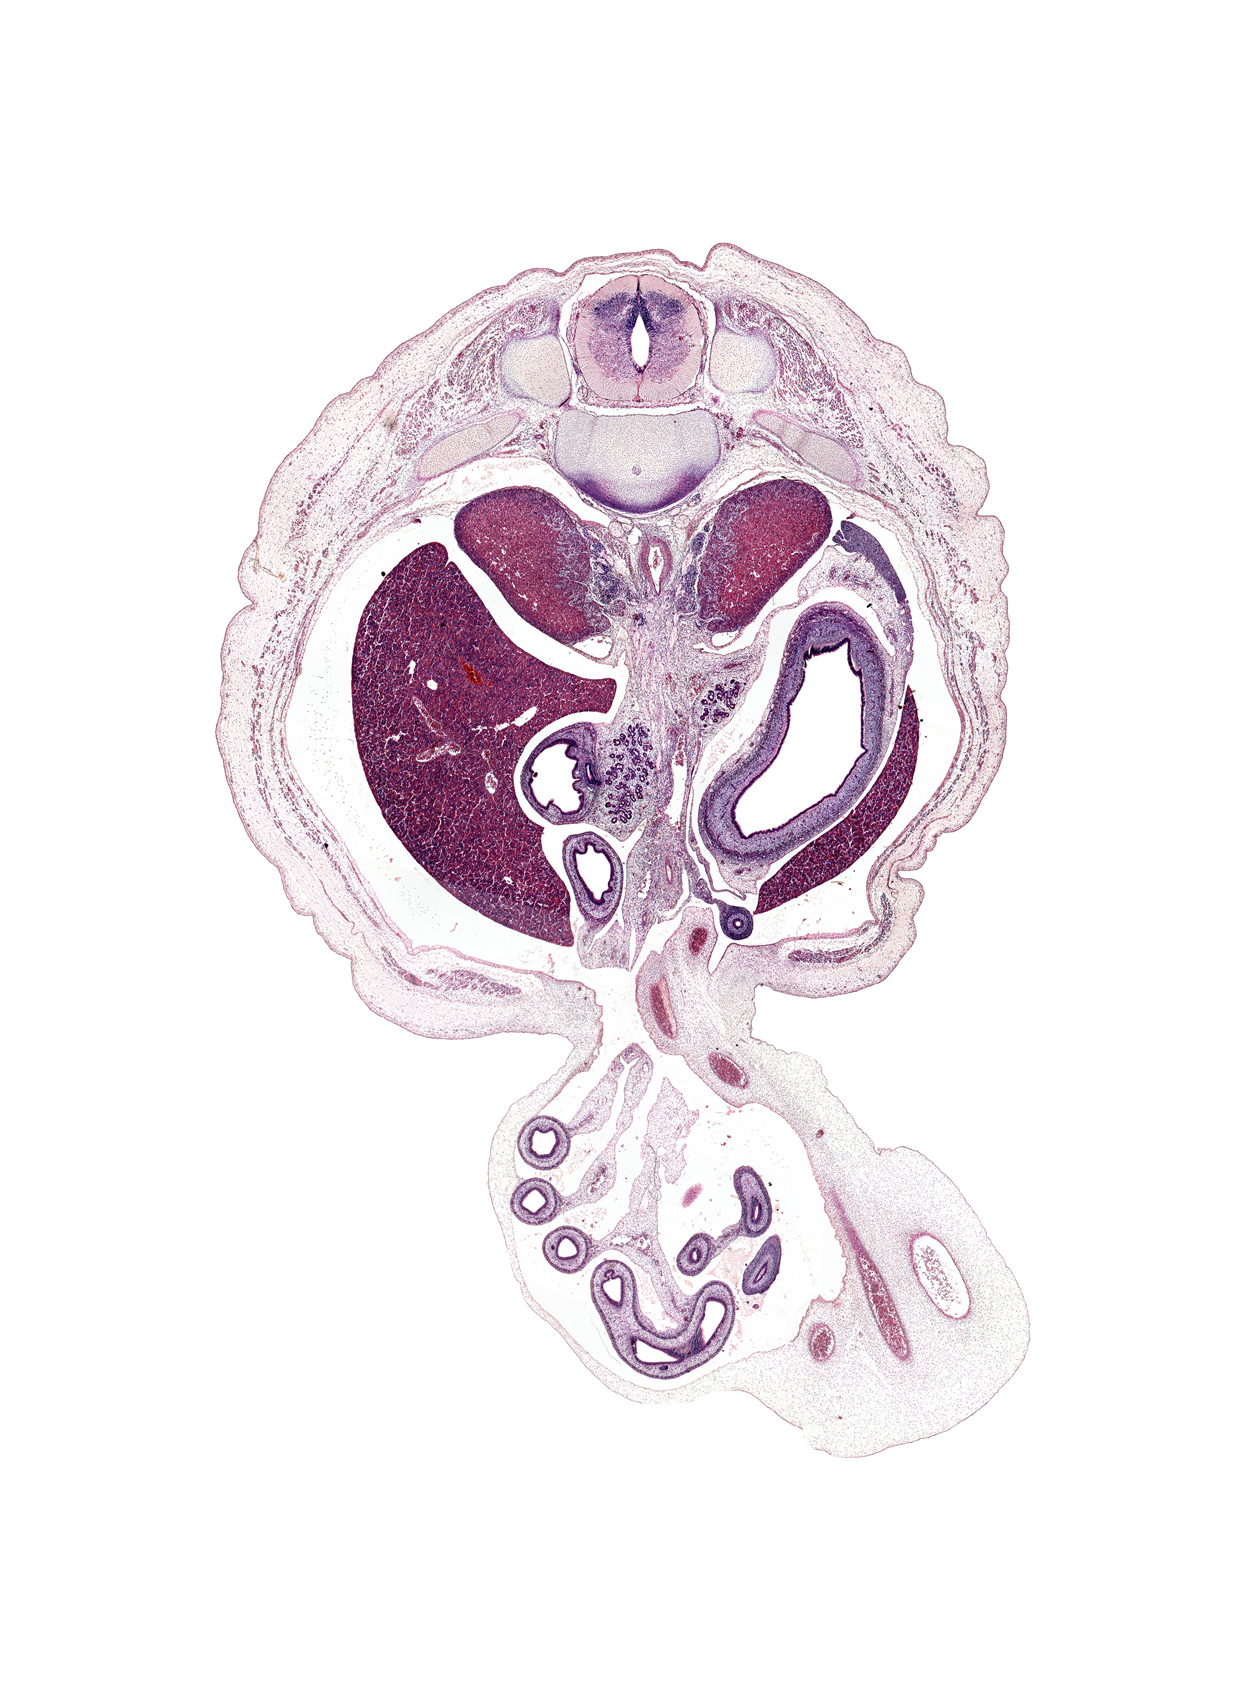 T-11 / T-12 interganglion region, T-12 / L-1 intervertebral disc, allantois, aorta, appendix, body of pancreas, body of stomach, celiac artery, distal limb of herniated midgut, distal part of duodenum, dorsal horn of grey matter, duodenum (second part), hindgut, junction of splenic and superior mesenteric veins, lateral horn of grey matter, left lobe of liver, left umbilical artery, lesser sac (omental bursa), notochord, proximal limb of herniated midgut, rib 12, right lobe of liver, right umbilical artery, spleen, superior mesenteric artery, superior mesenteric vein, tail of pancreas, umbilical coelom, umbilical vein, ventral horn of grey matter